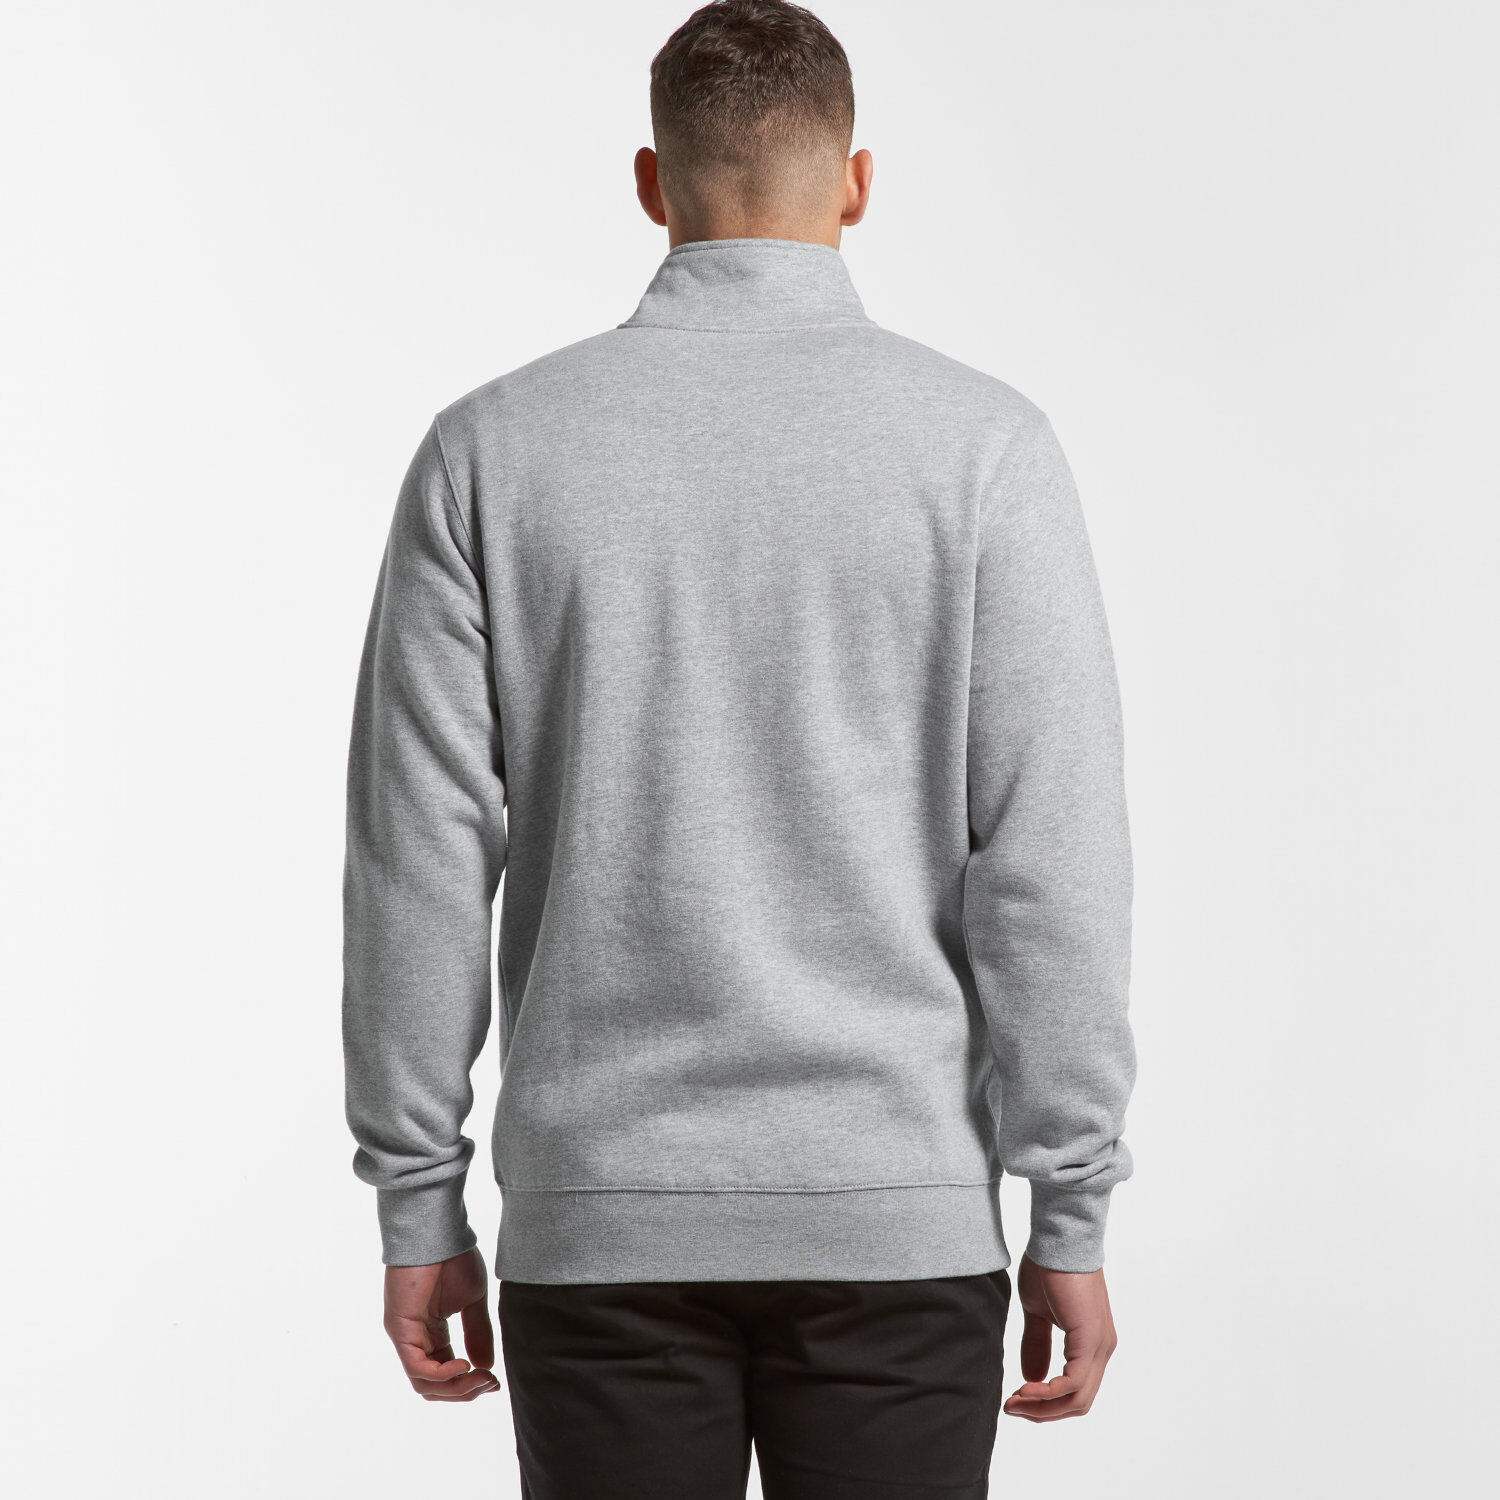 AS Colour Men's Half Zip Crew Sweater